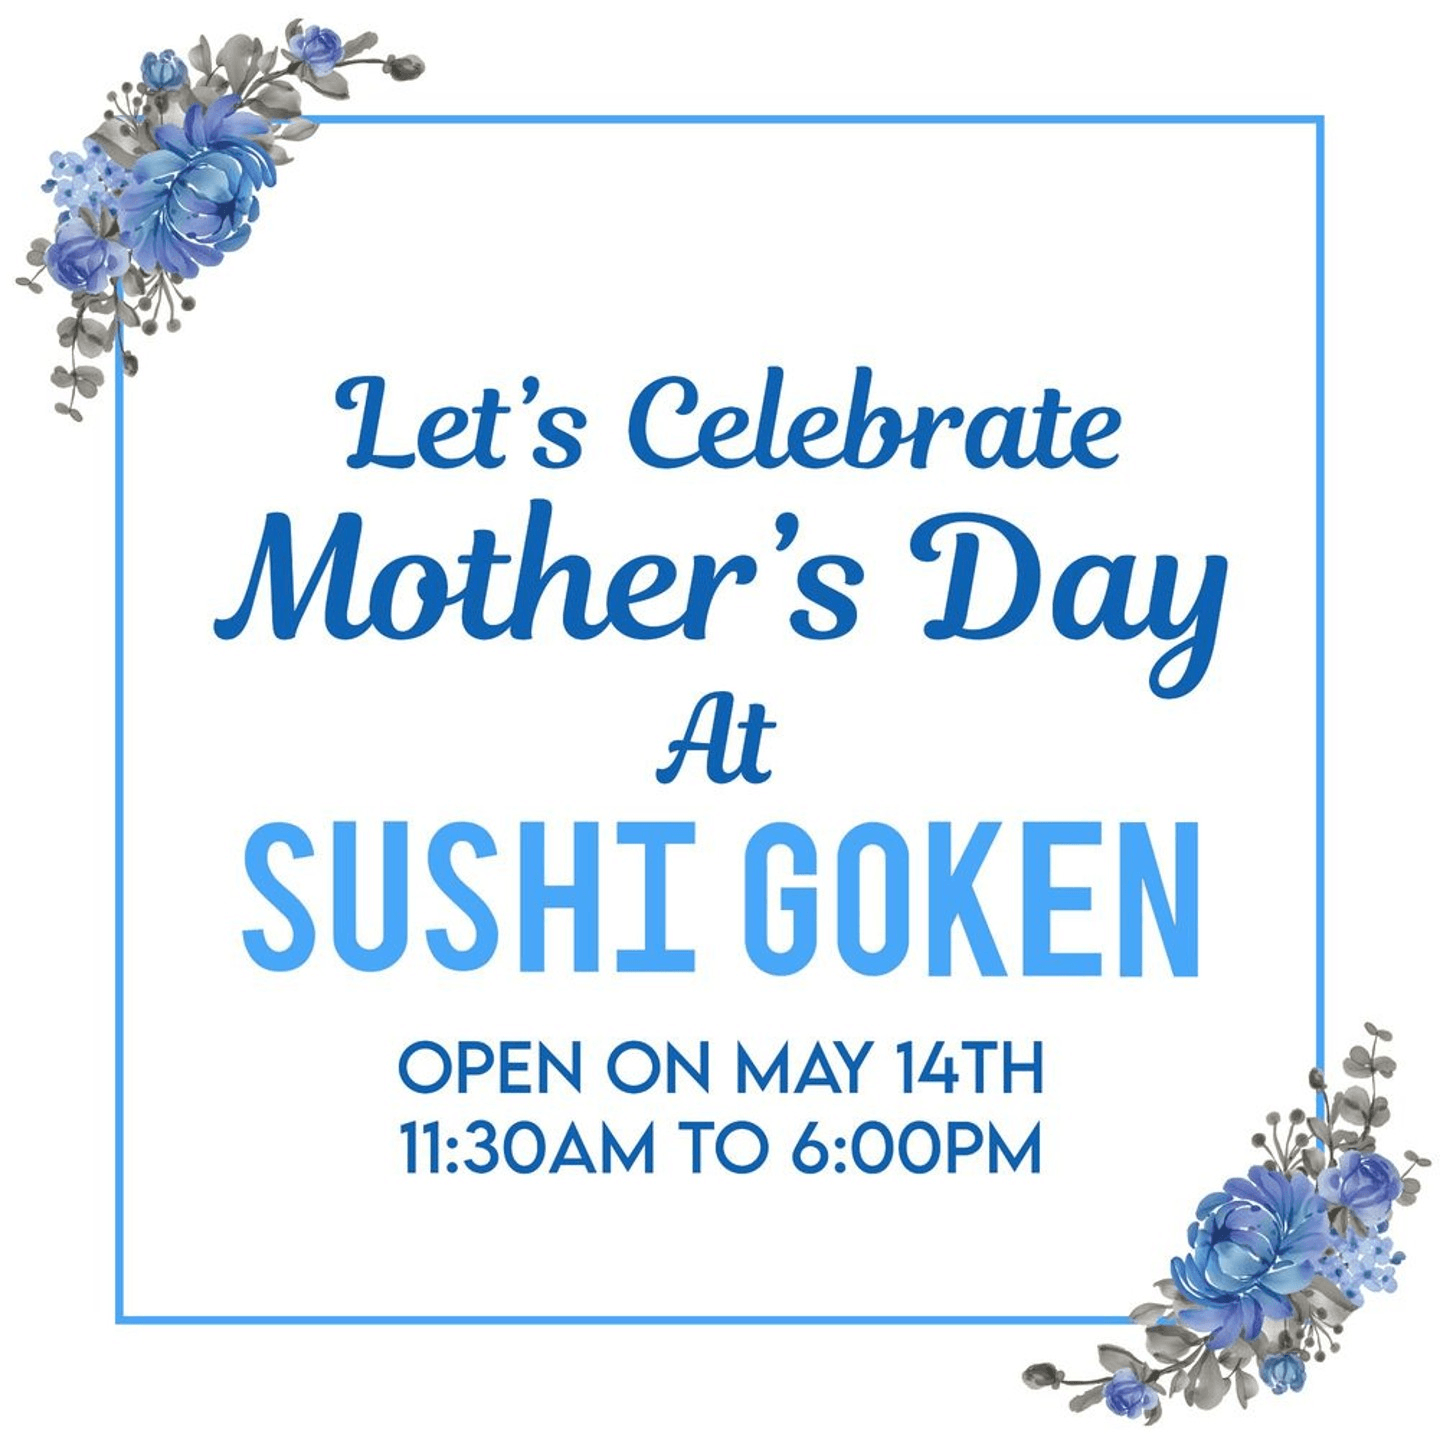 Celebrate Mother's Day at Sushi Goken